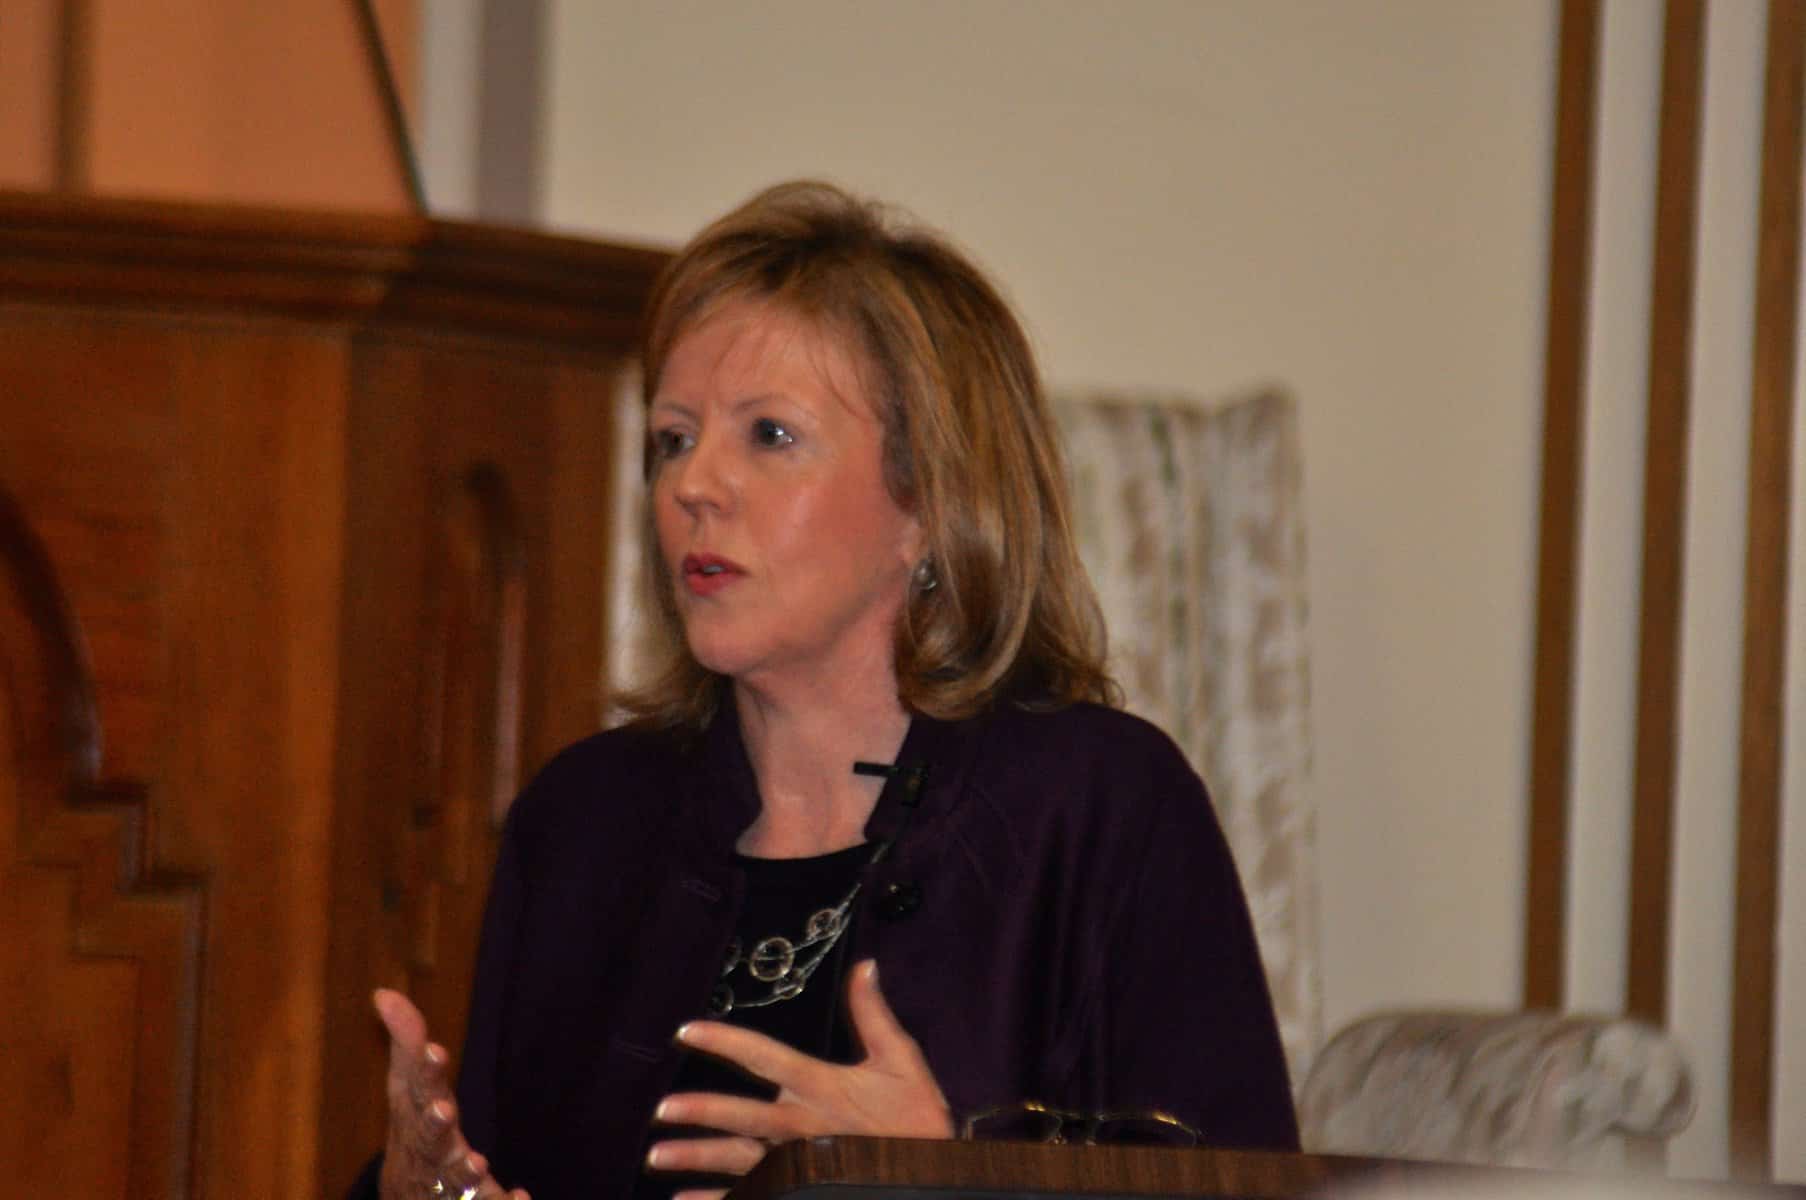 Susan Michael, U.S.A. director of the International Christian Embassy Jerusalem